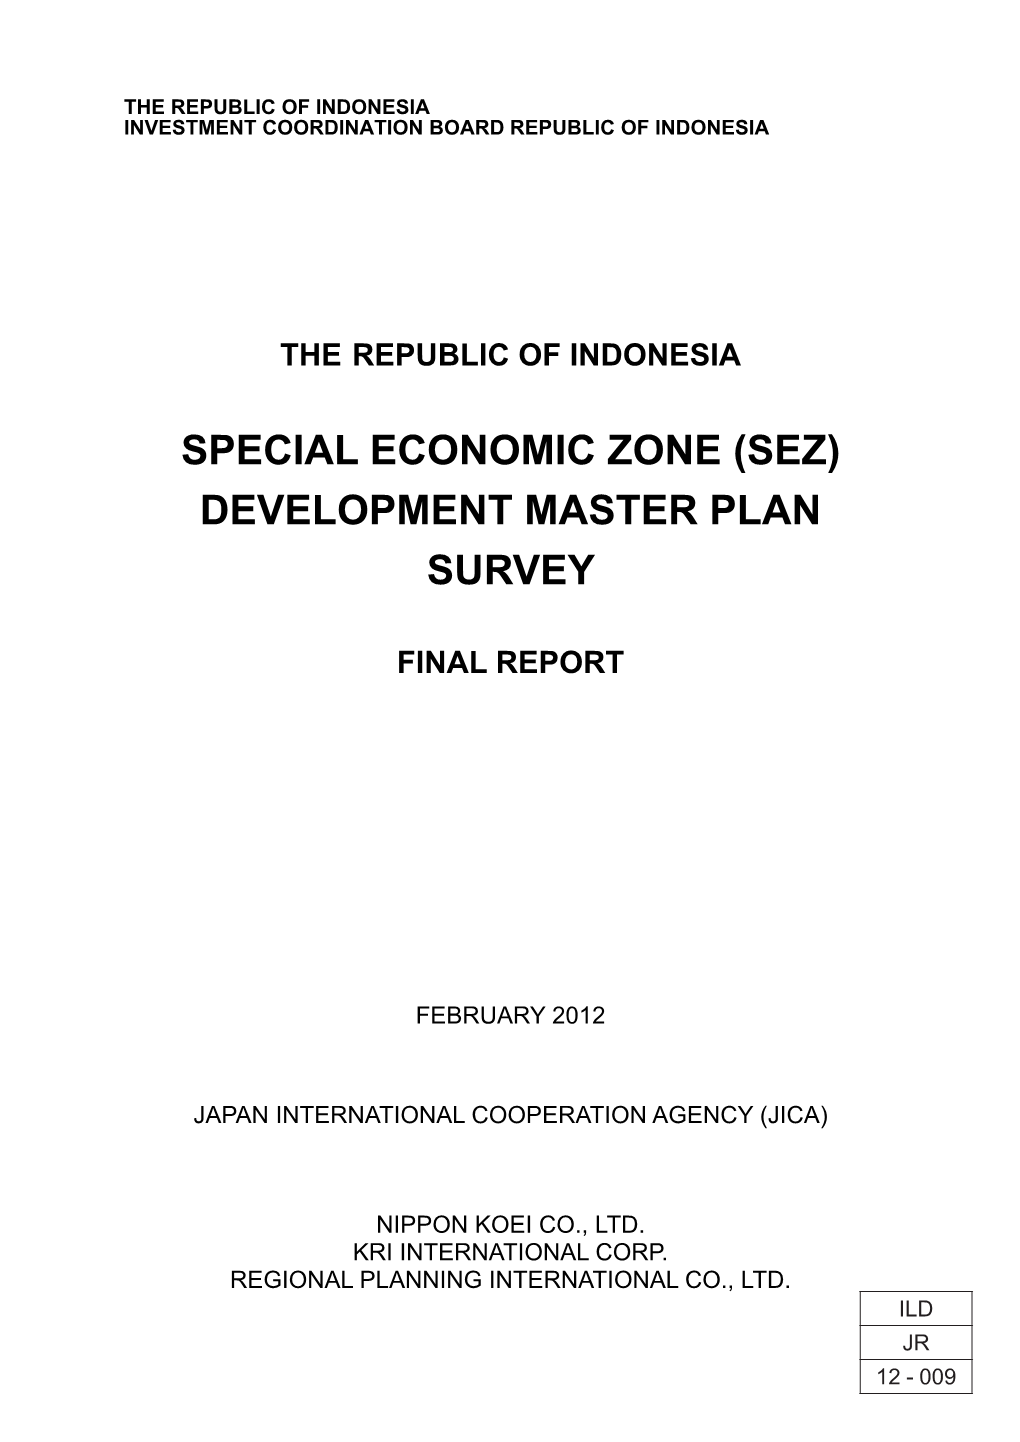 Special Economic Zone (Sez) Development Master Plan Development Master Plan Survey Survey Final Report Final Report